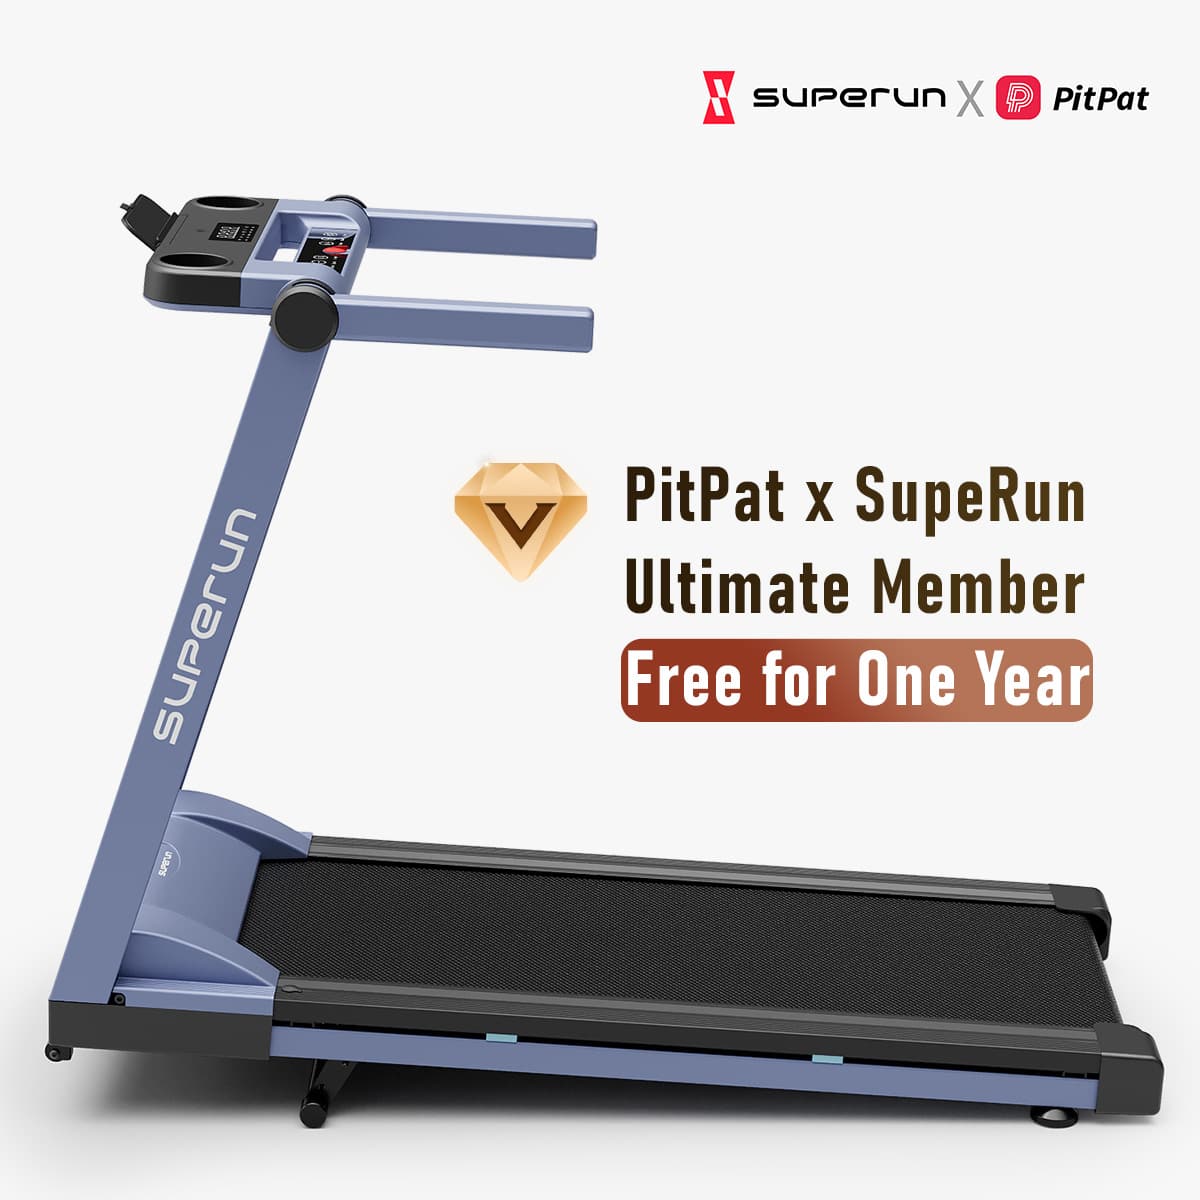 SupeRun® AS02 Inclined Foldable Smart 10 MPH Online Racing Treadmill Light Blue